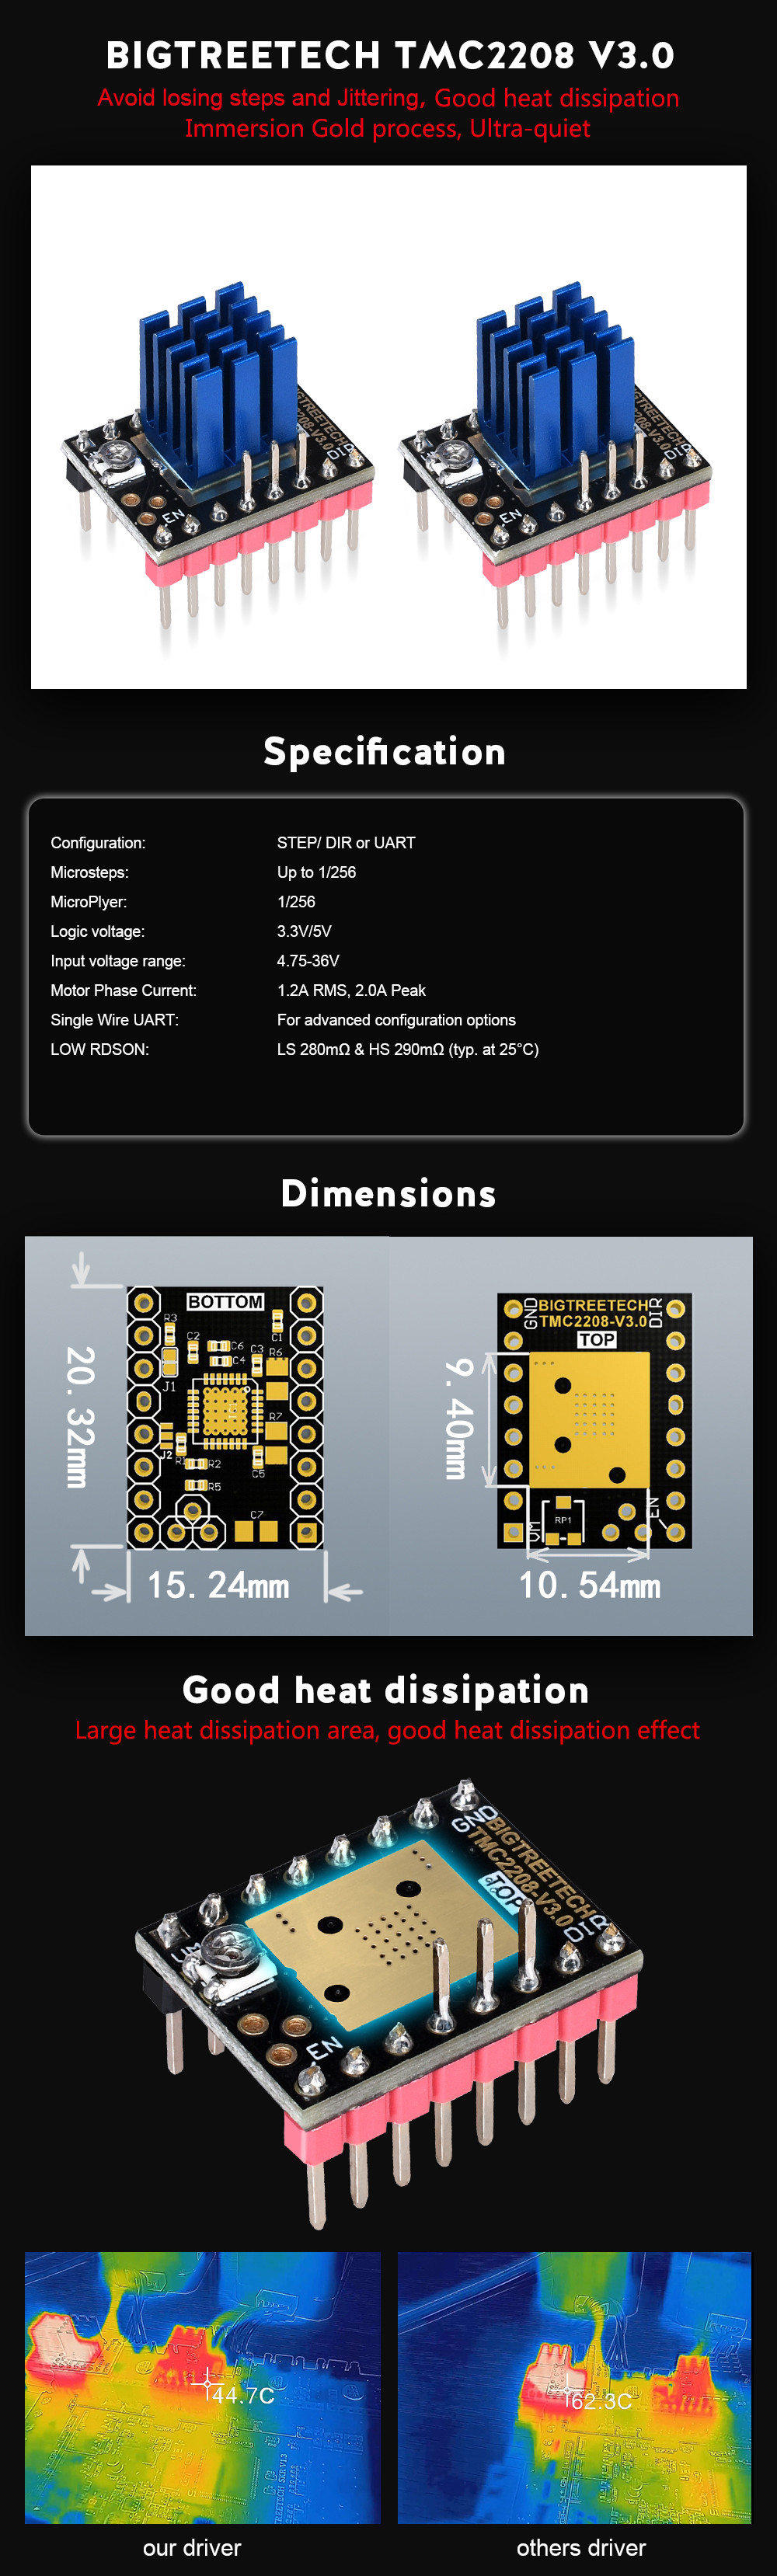 BIGTREETECHreg-TMC2208-V30-UART-Mode-Stepper-Motor-StepStick-Driver-for-Reprap-3D-Printer-Part-1569953-1